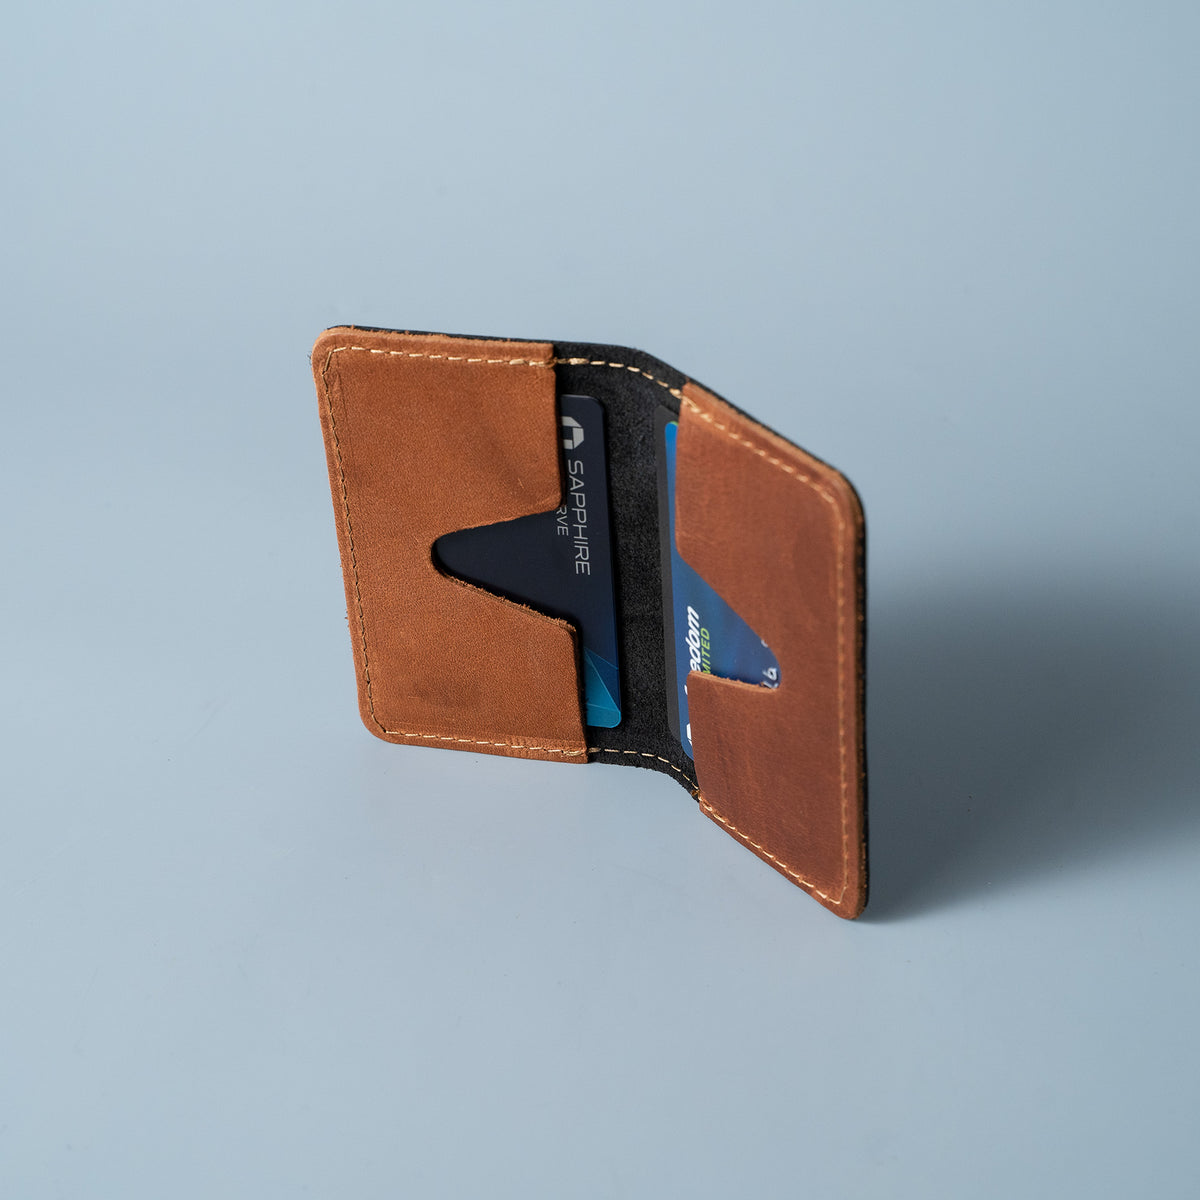 The Vincent Fine Leather Business Card Holder Wallet BiFold